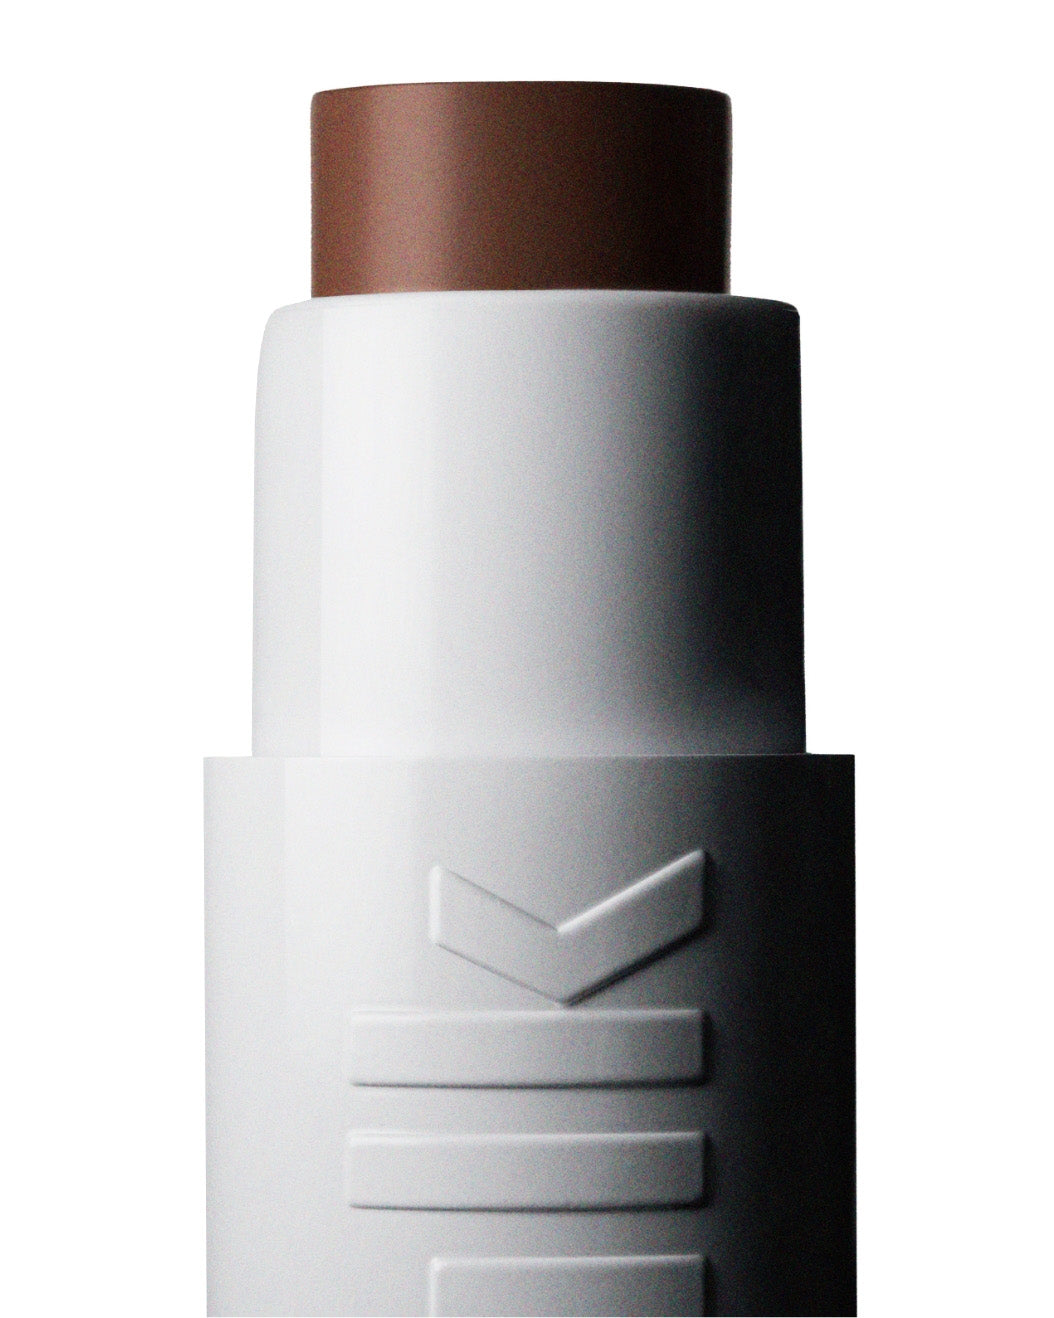 Close up of Milk Makeup Flex Foundation Stick on a white background